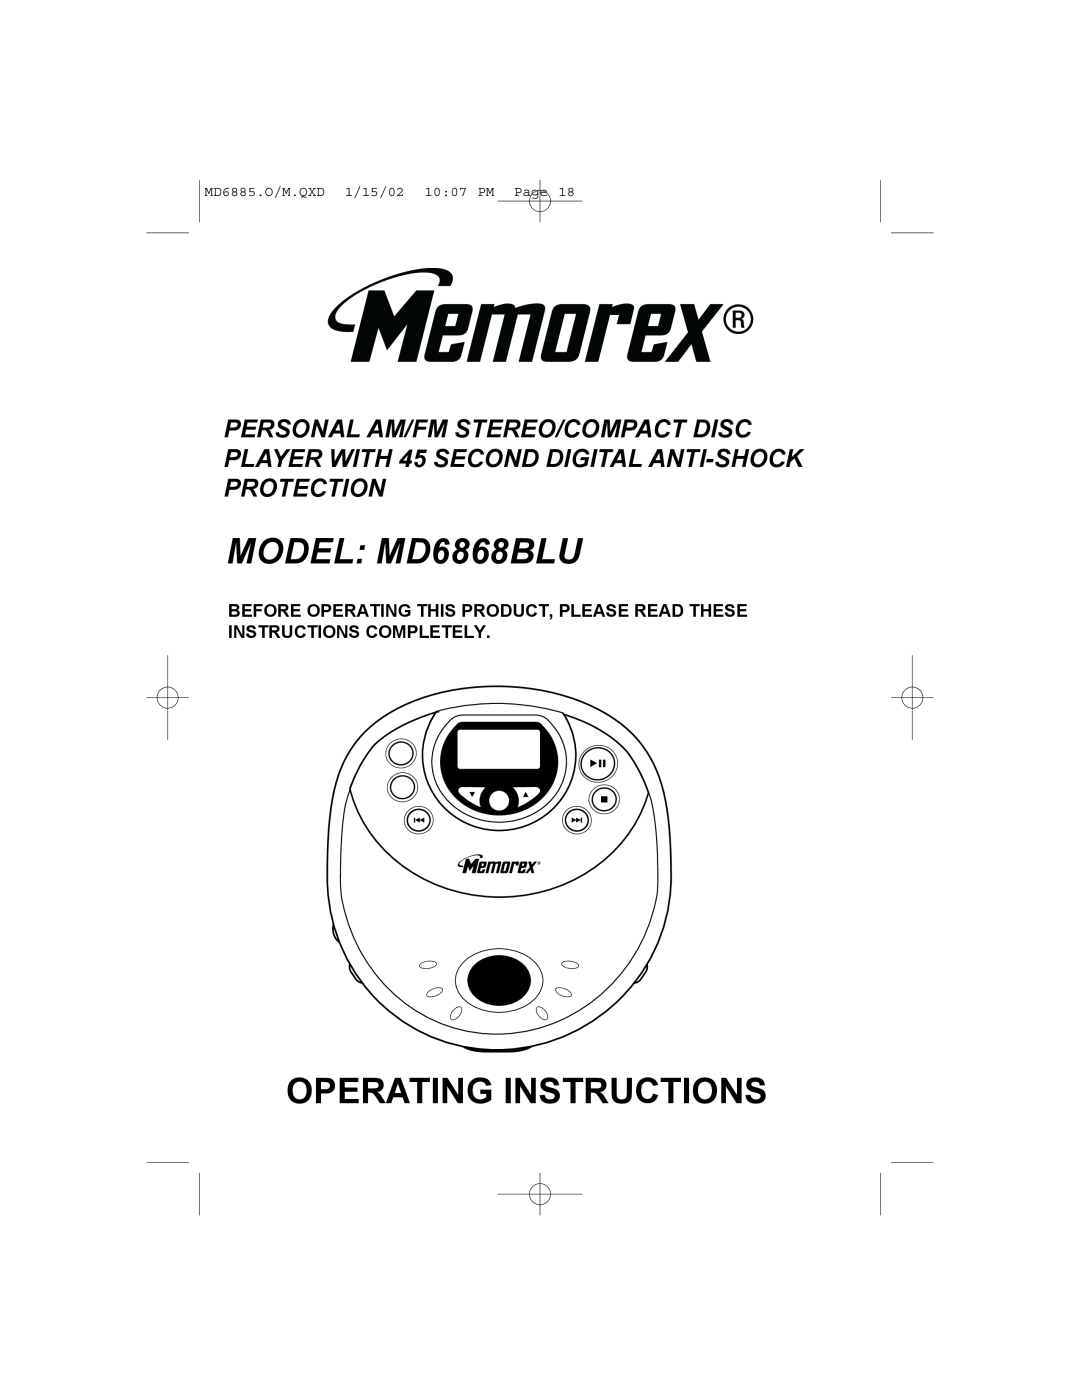 Memorex manual MODEL MD6868BLU, Operating Instructions, MD6885.O/M.QXD 1/15/02 10 07 PM Page 